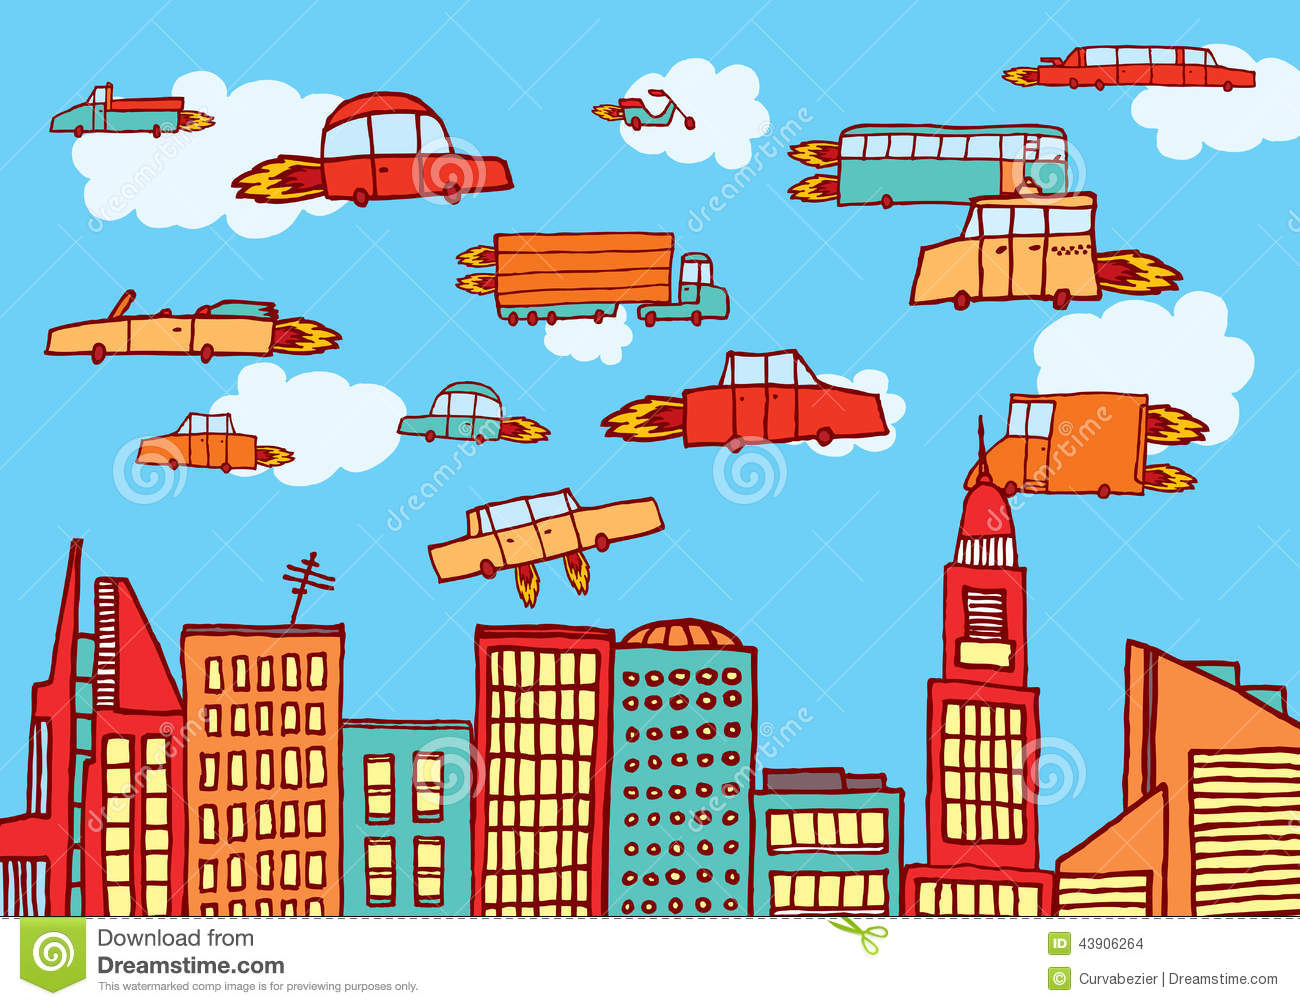 Illustration Of Future Urban Air Transportation Or Flying Cars